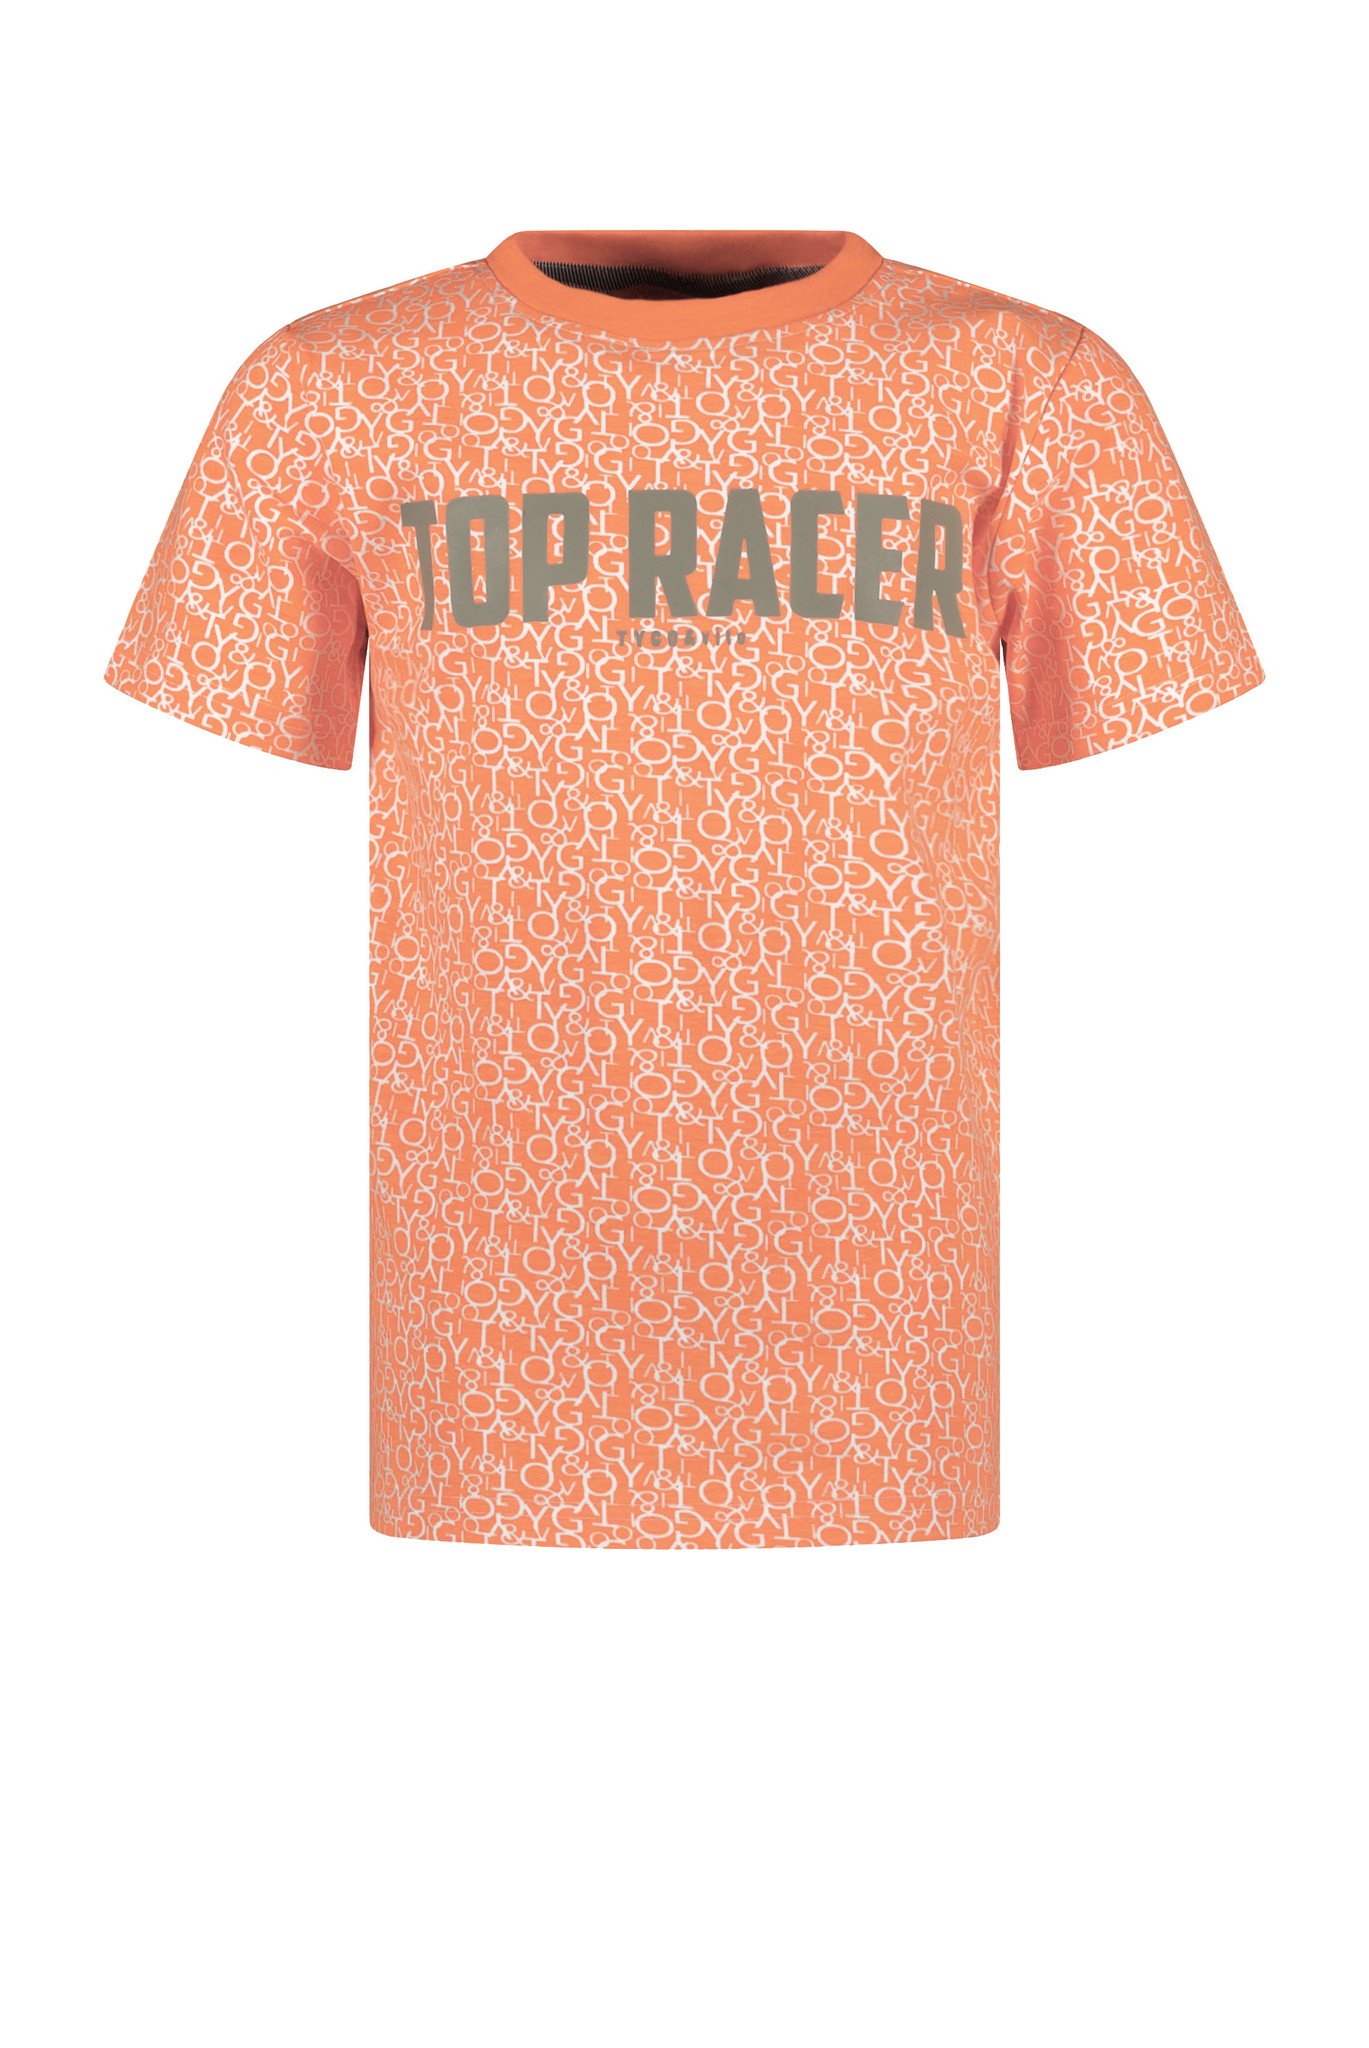 Tygo & Vito Jongens t-shirt AOP tekst - Oranje clownfish